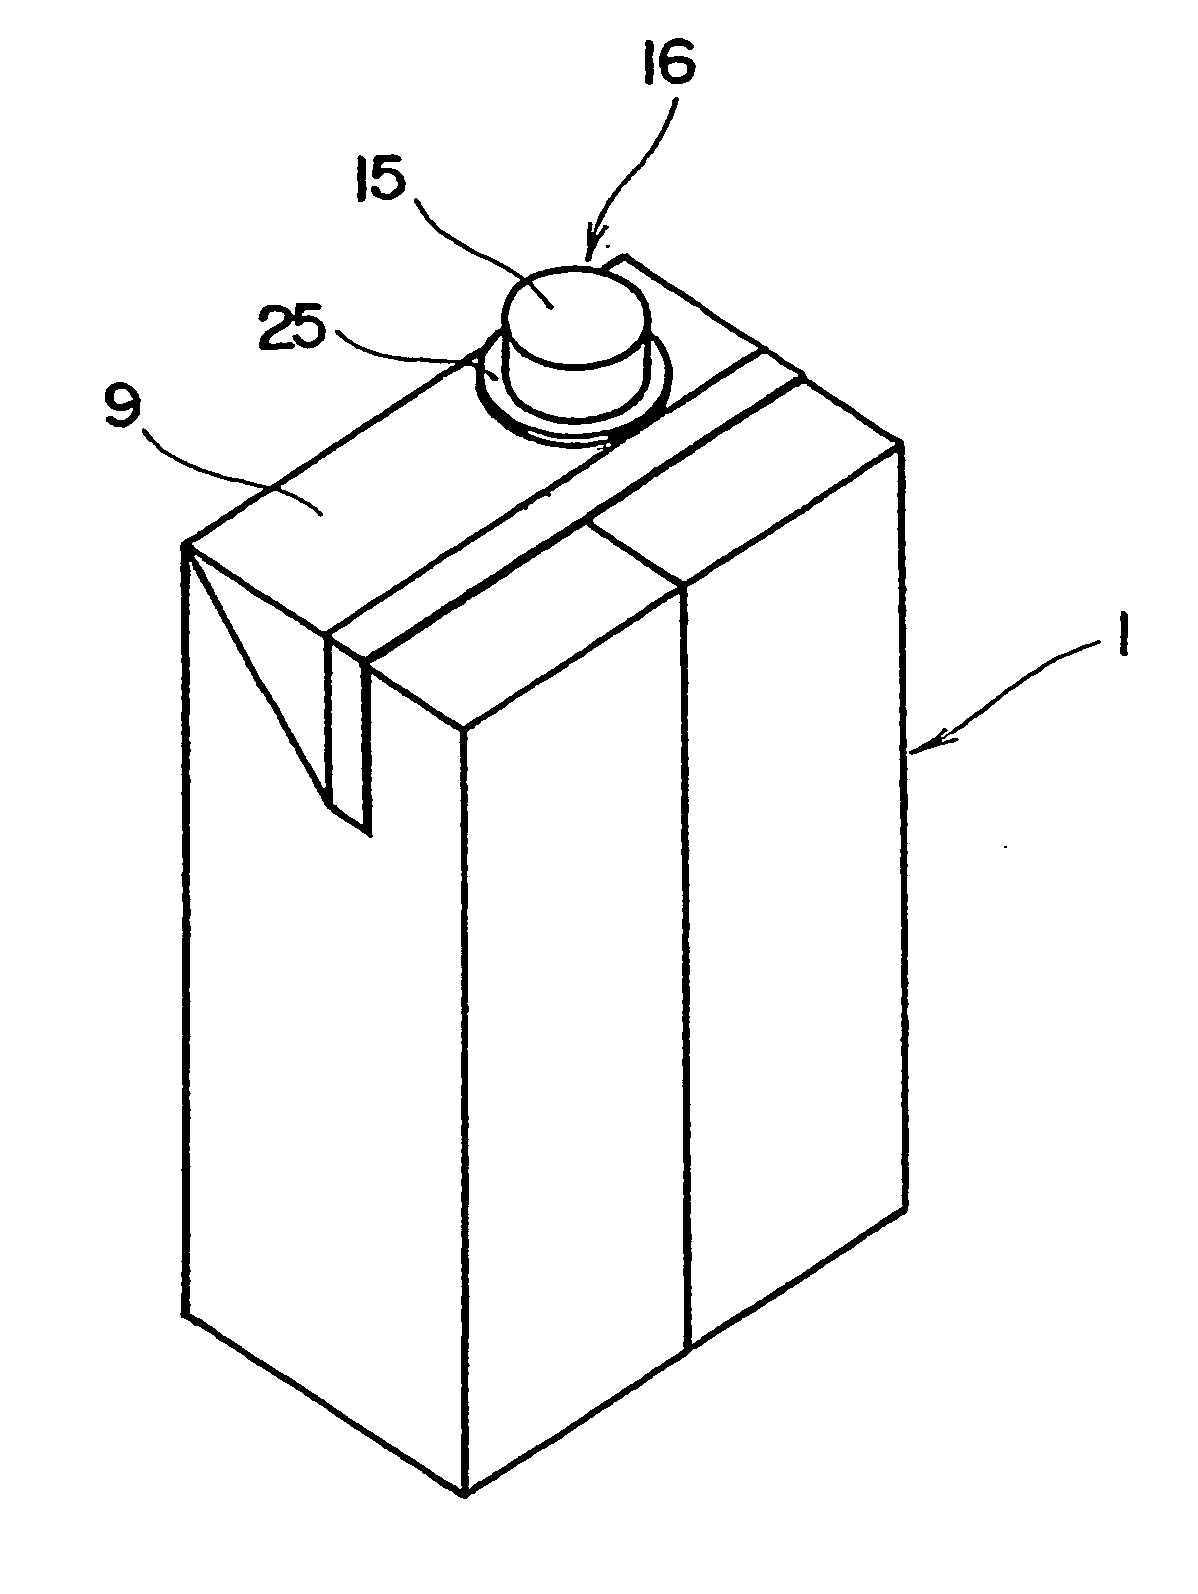 Paper container for fluid having spout plug